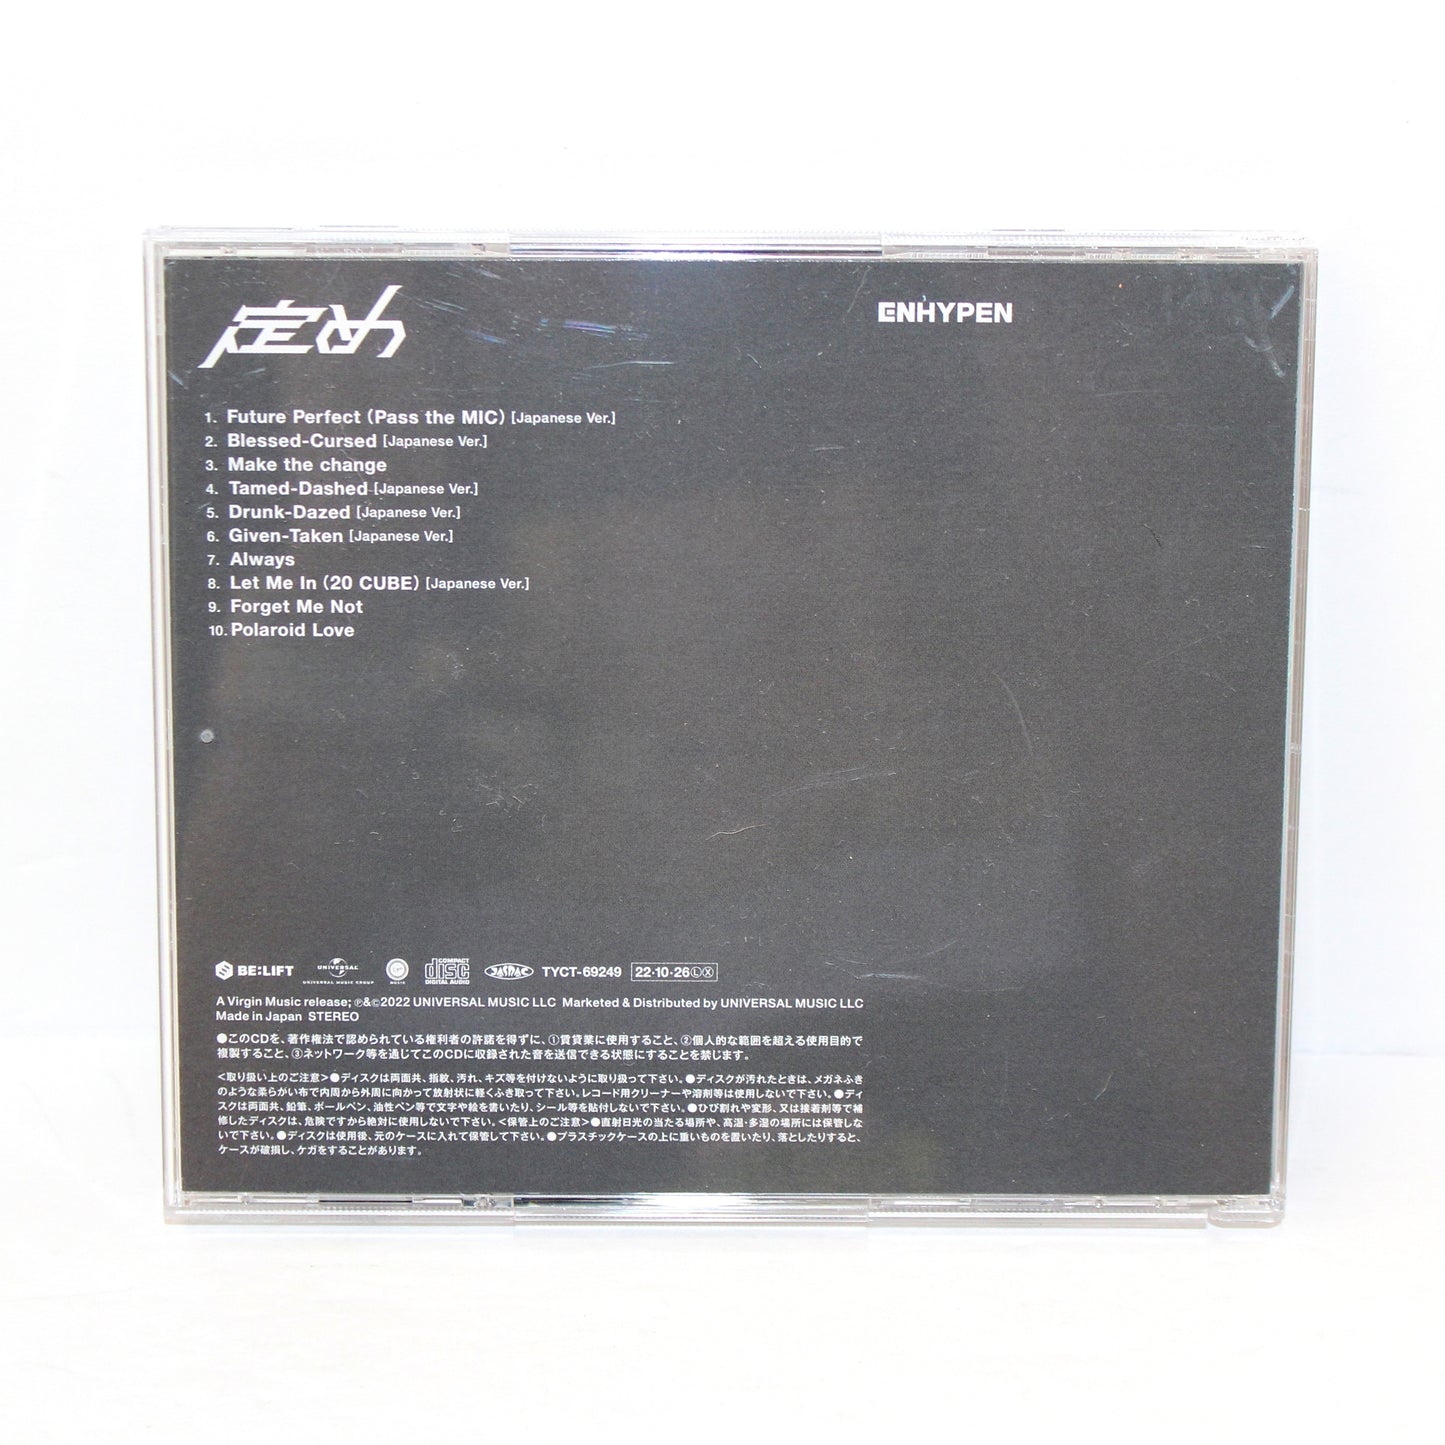 ENHYPEN 1st Japanese Album: Sadame (定め) - Standard Edition | Jewel Case